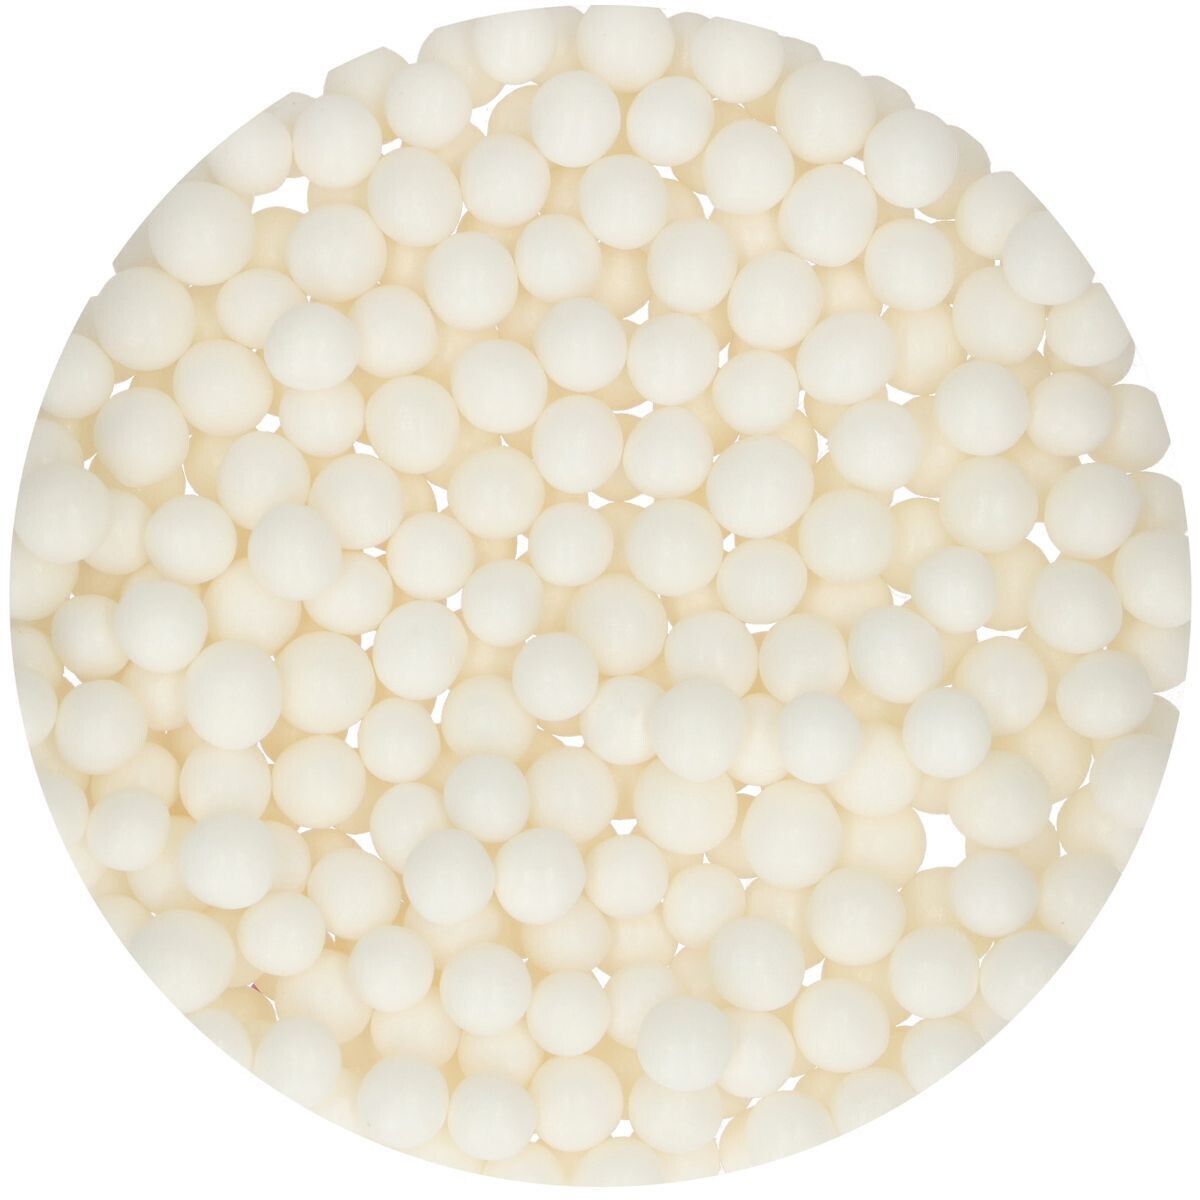 FunCakes Sugar Pearls -LARGE WHITE 80g - Μείγμα Ζαχαρωτών Πέρλες Λευκές Μεγάλες